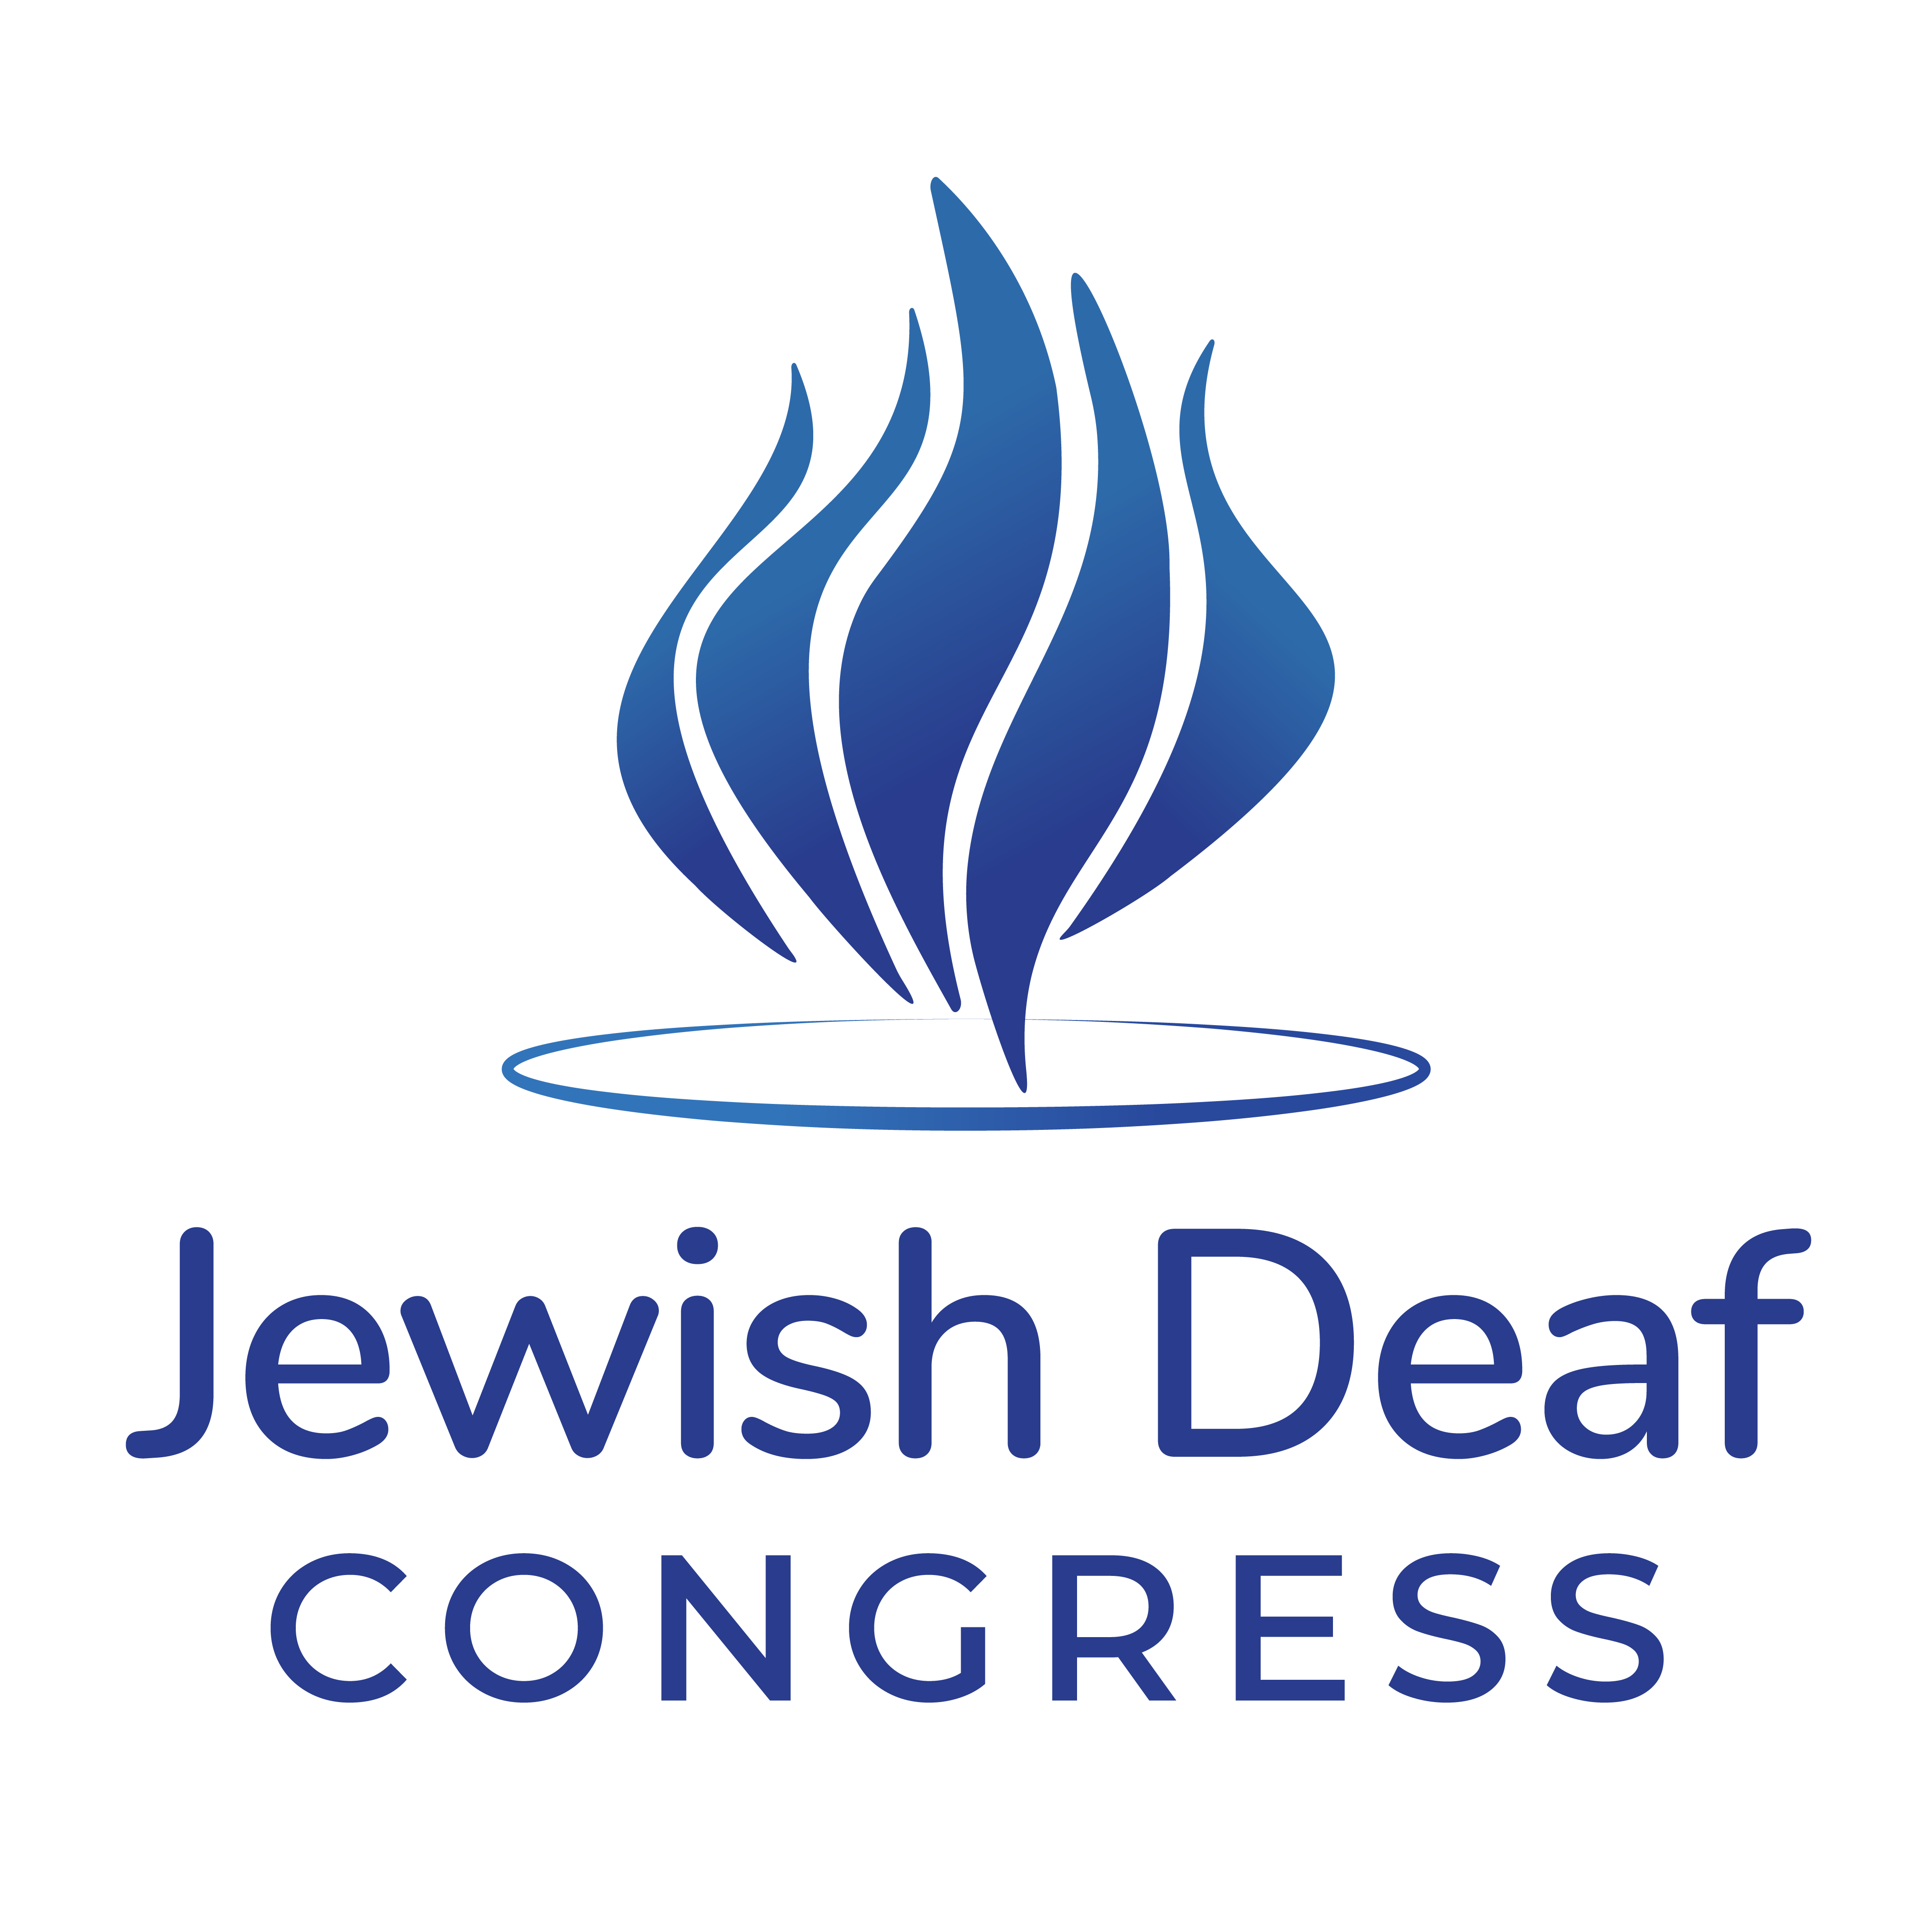 Jewish Deaf Congress logo